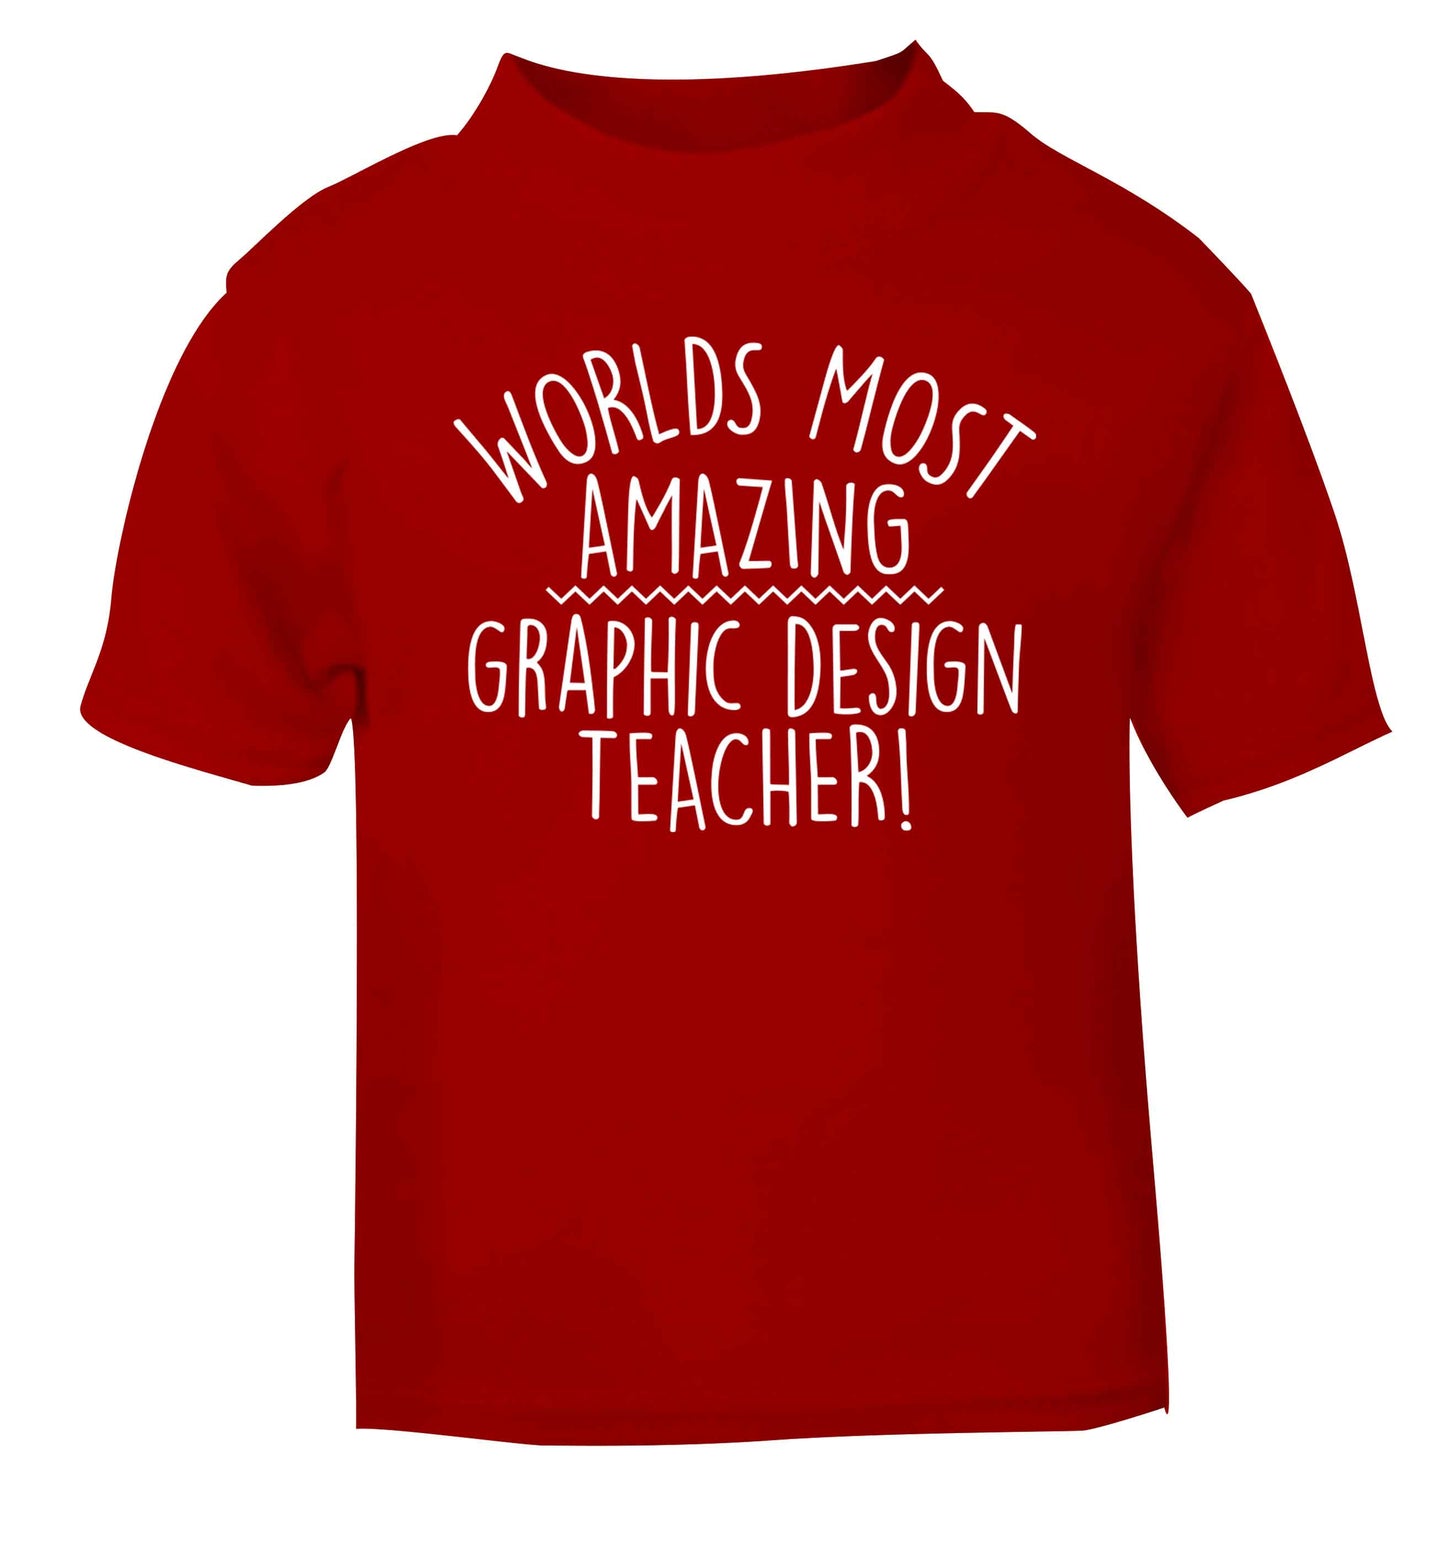 Worlds most amazing graphic design teacher red baby toddler Tshirt 2 Years